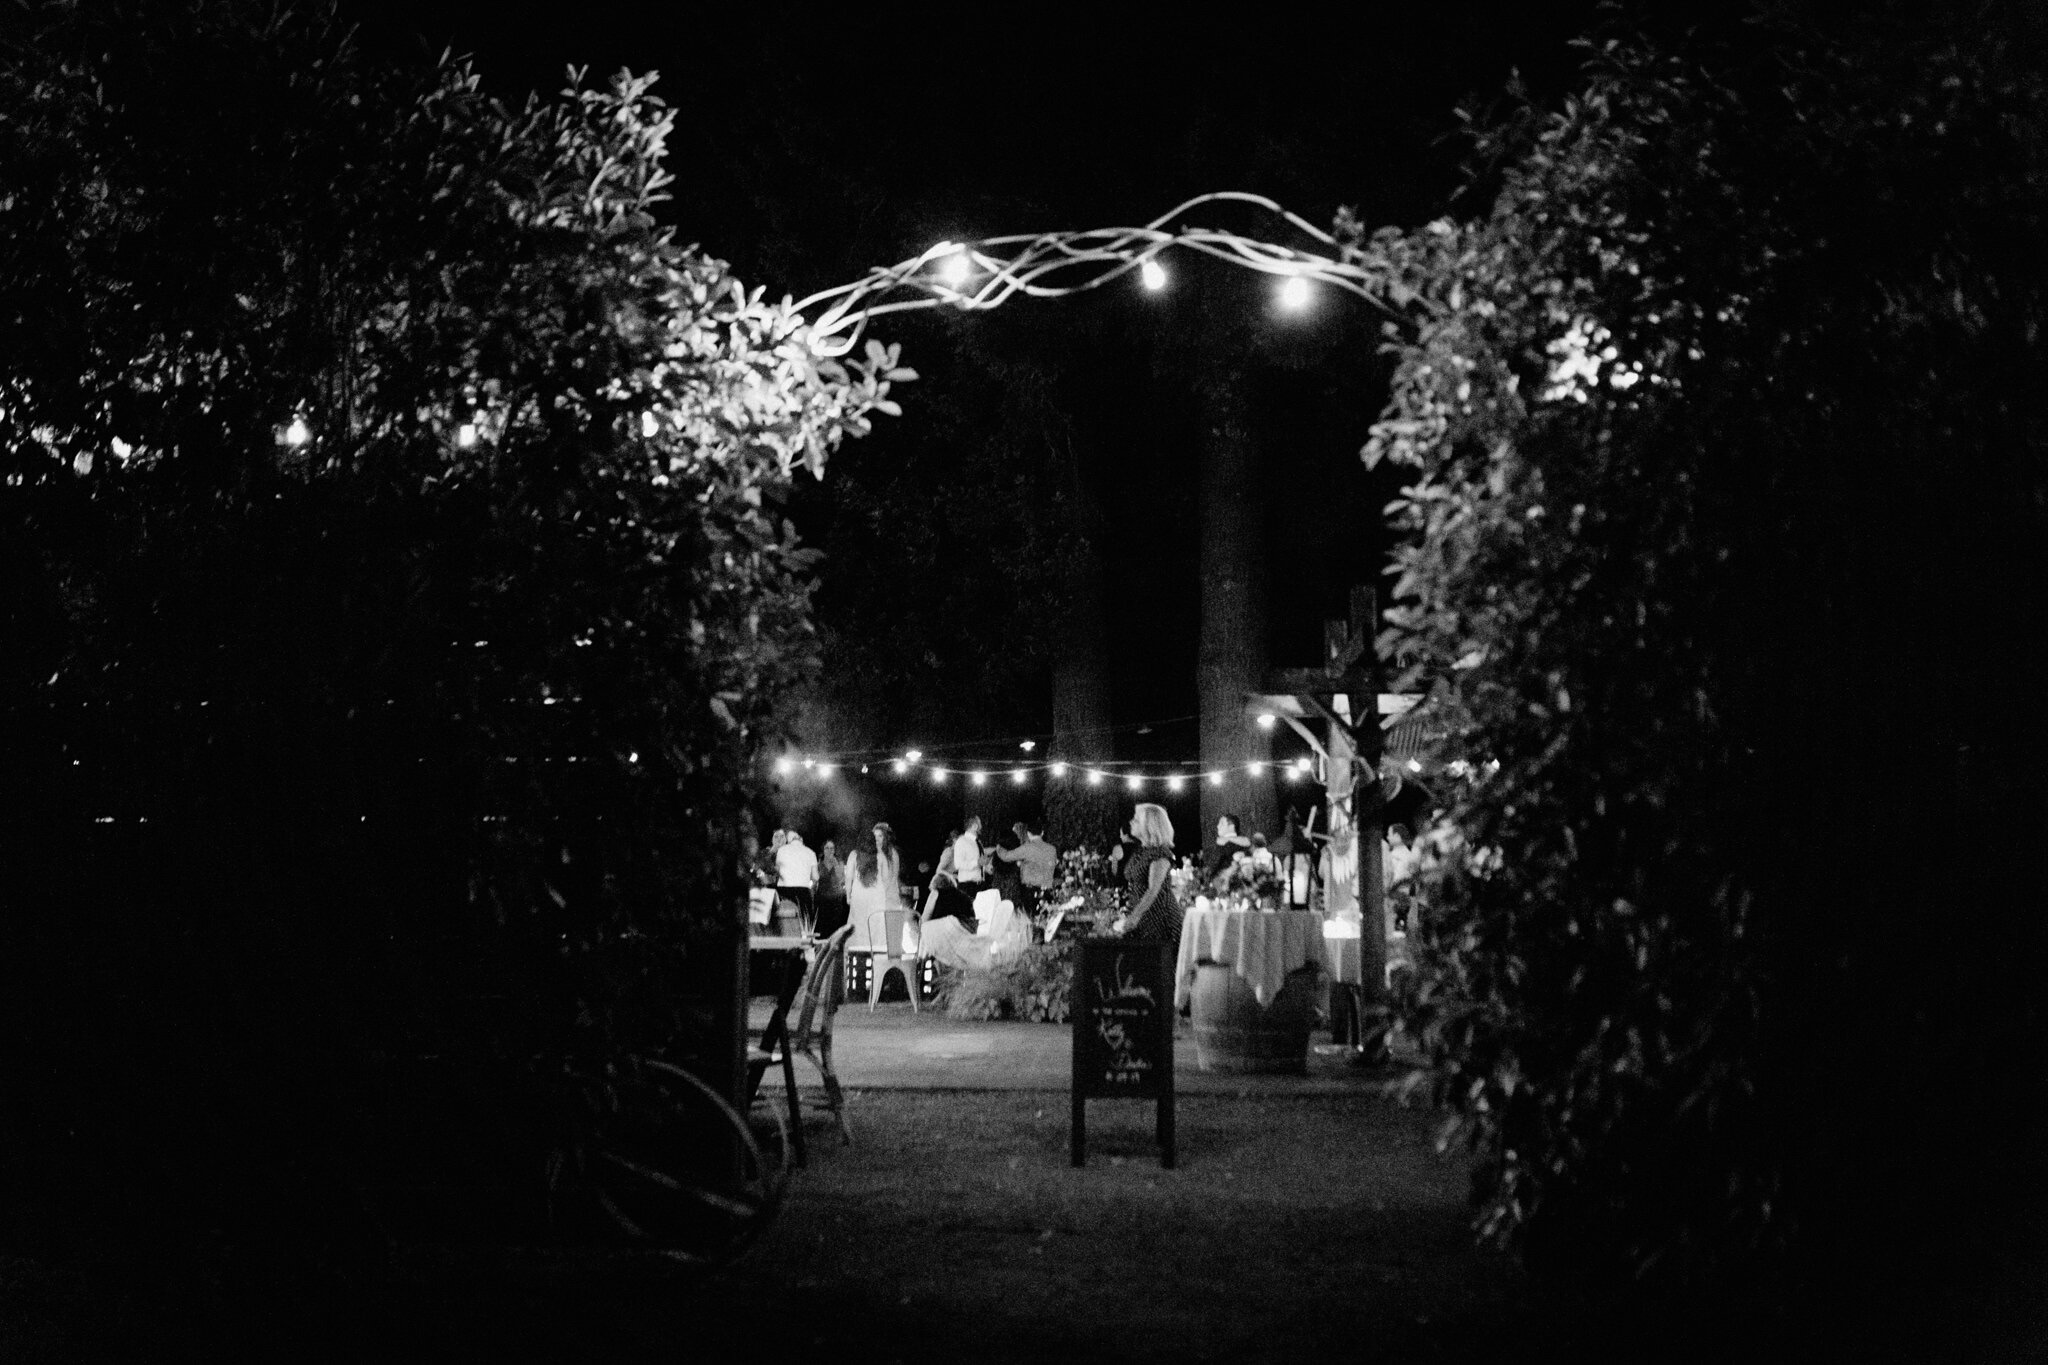 boonville-hotel-wedding-mendocino-documentary-wedding-photographer-melissa-habegger-109.jpg